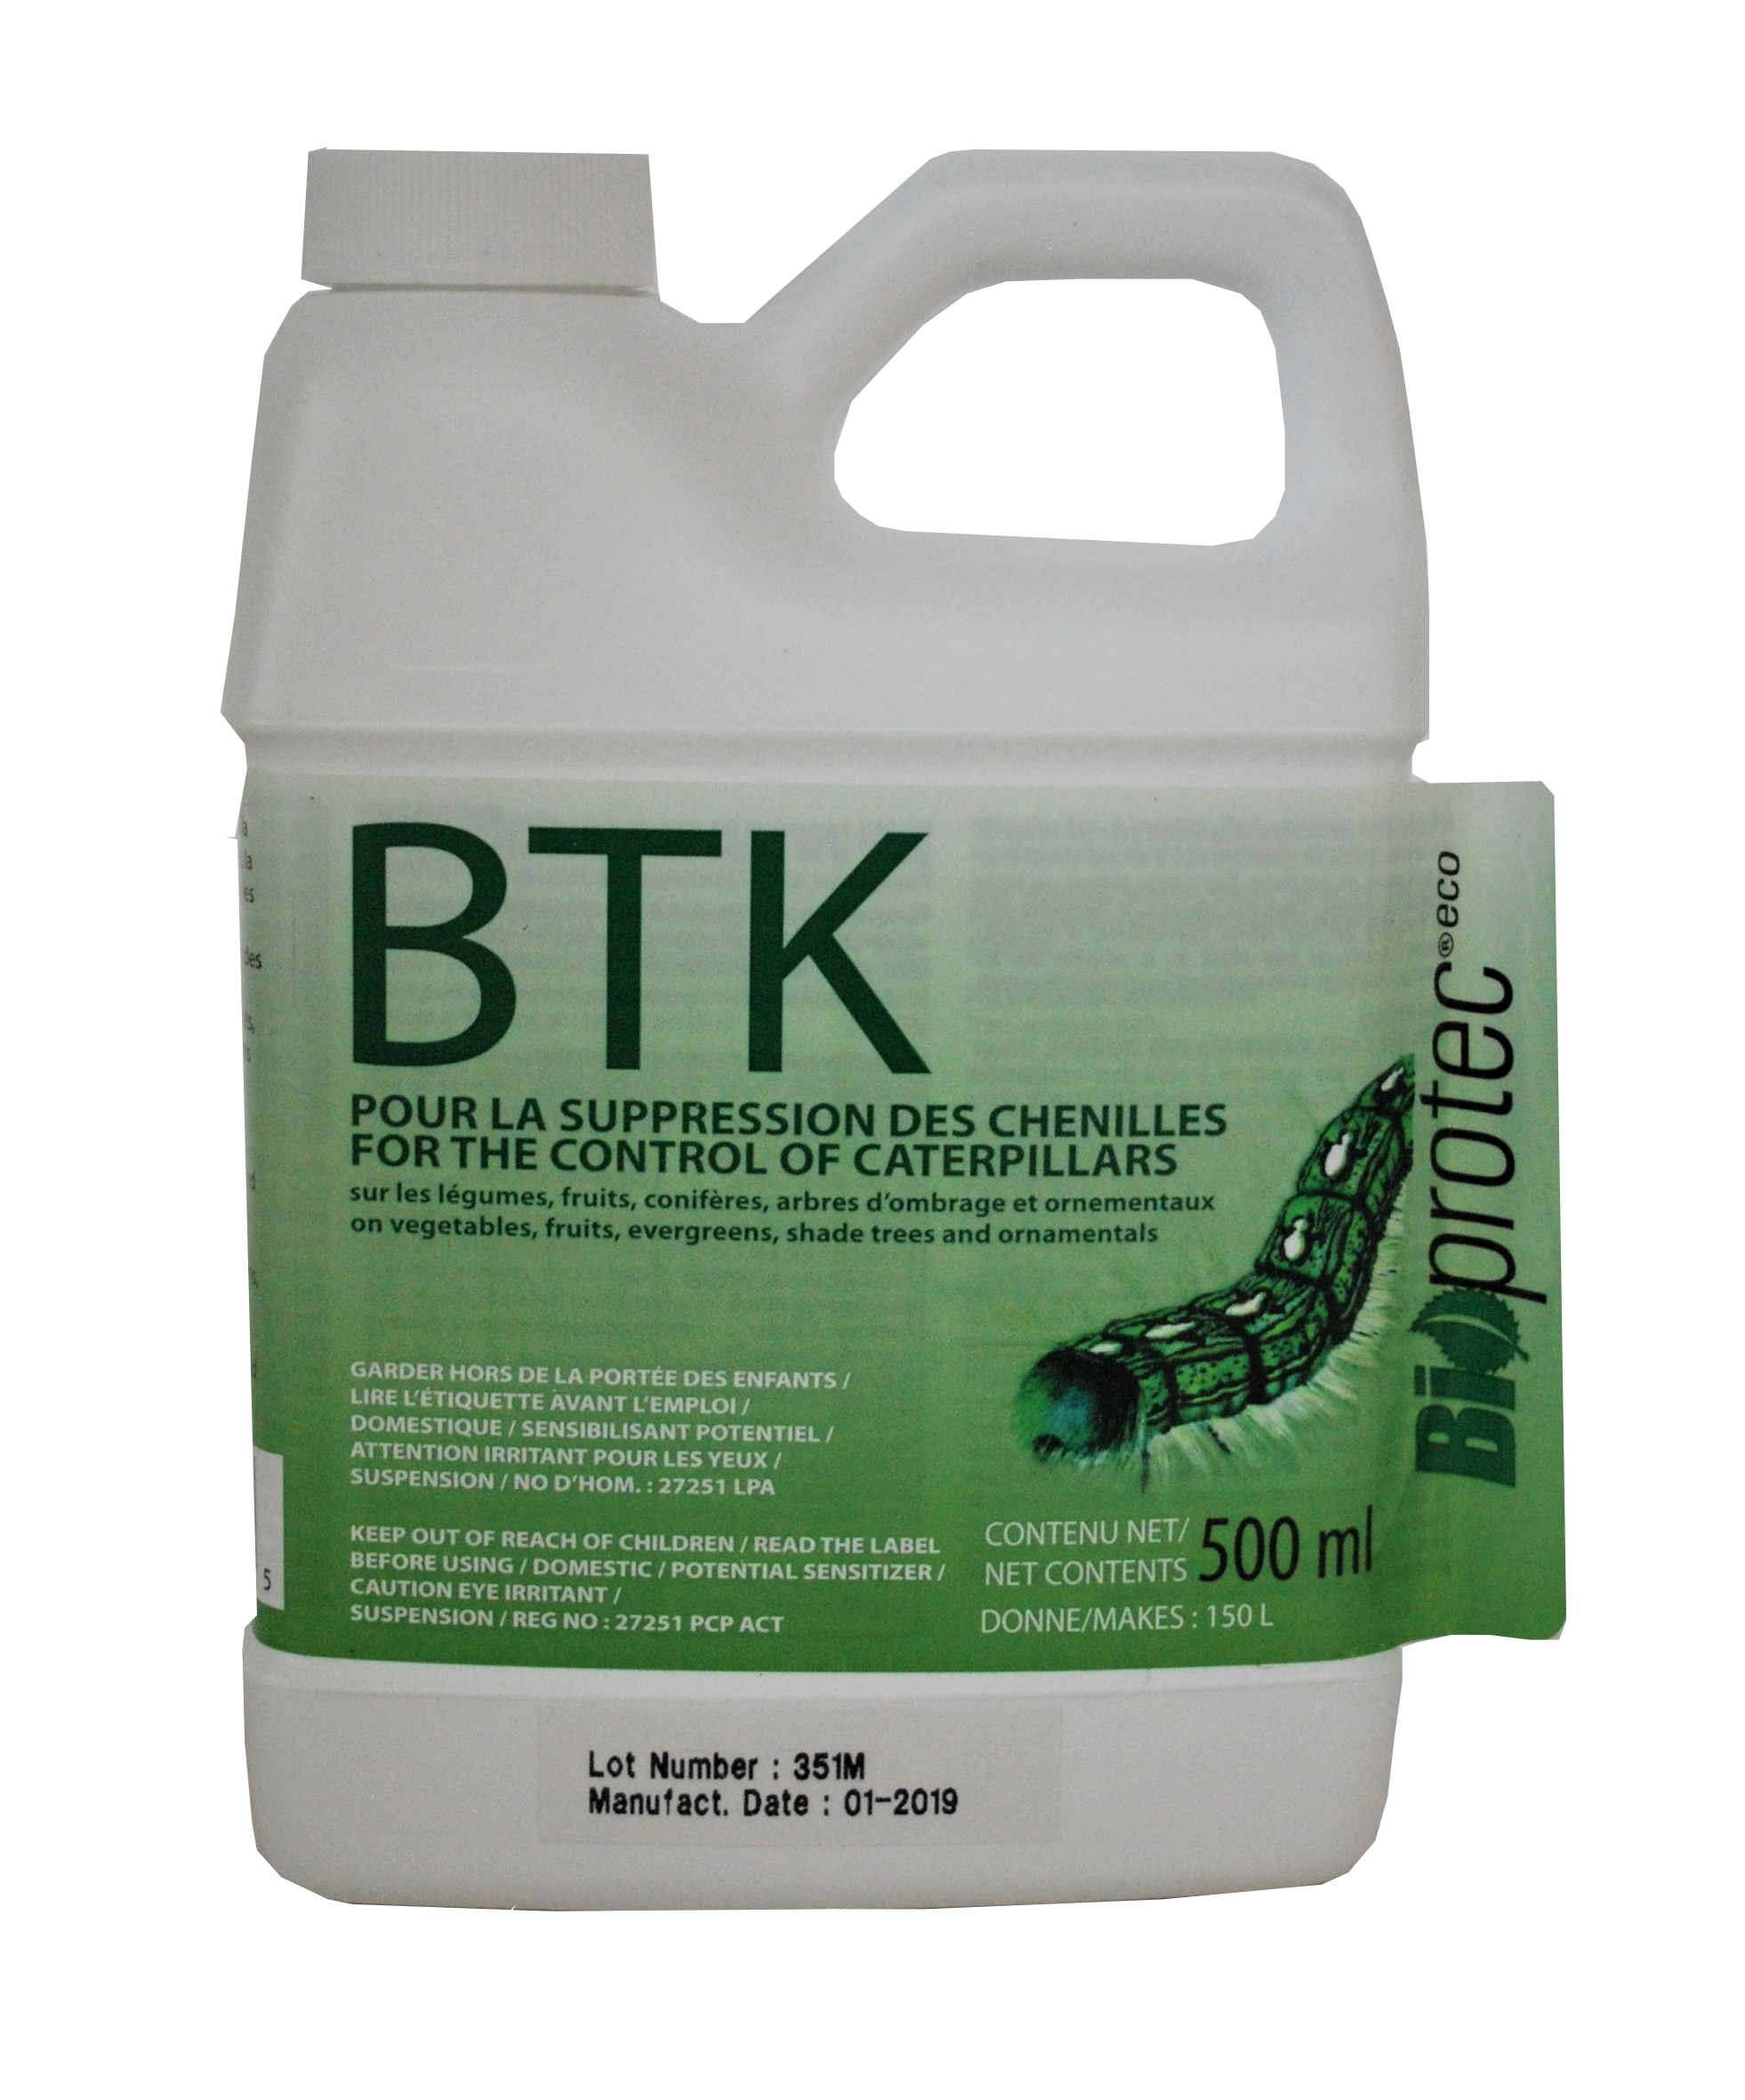 Btk (bacillus thur.)